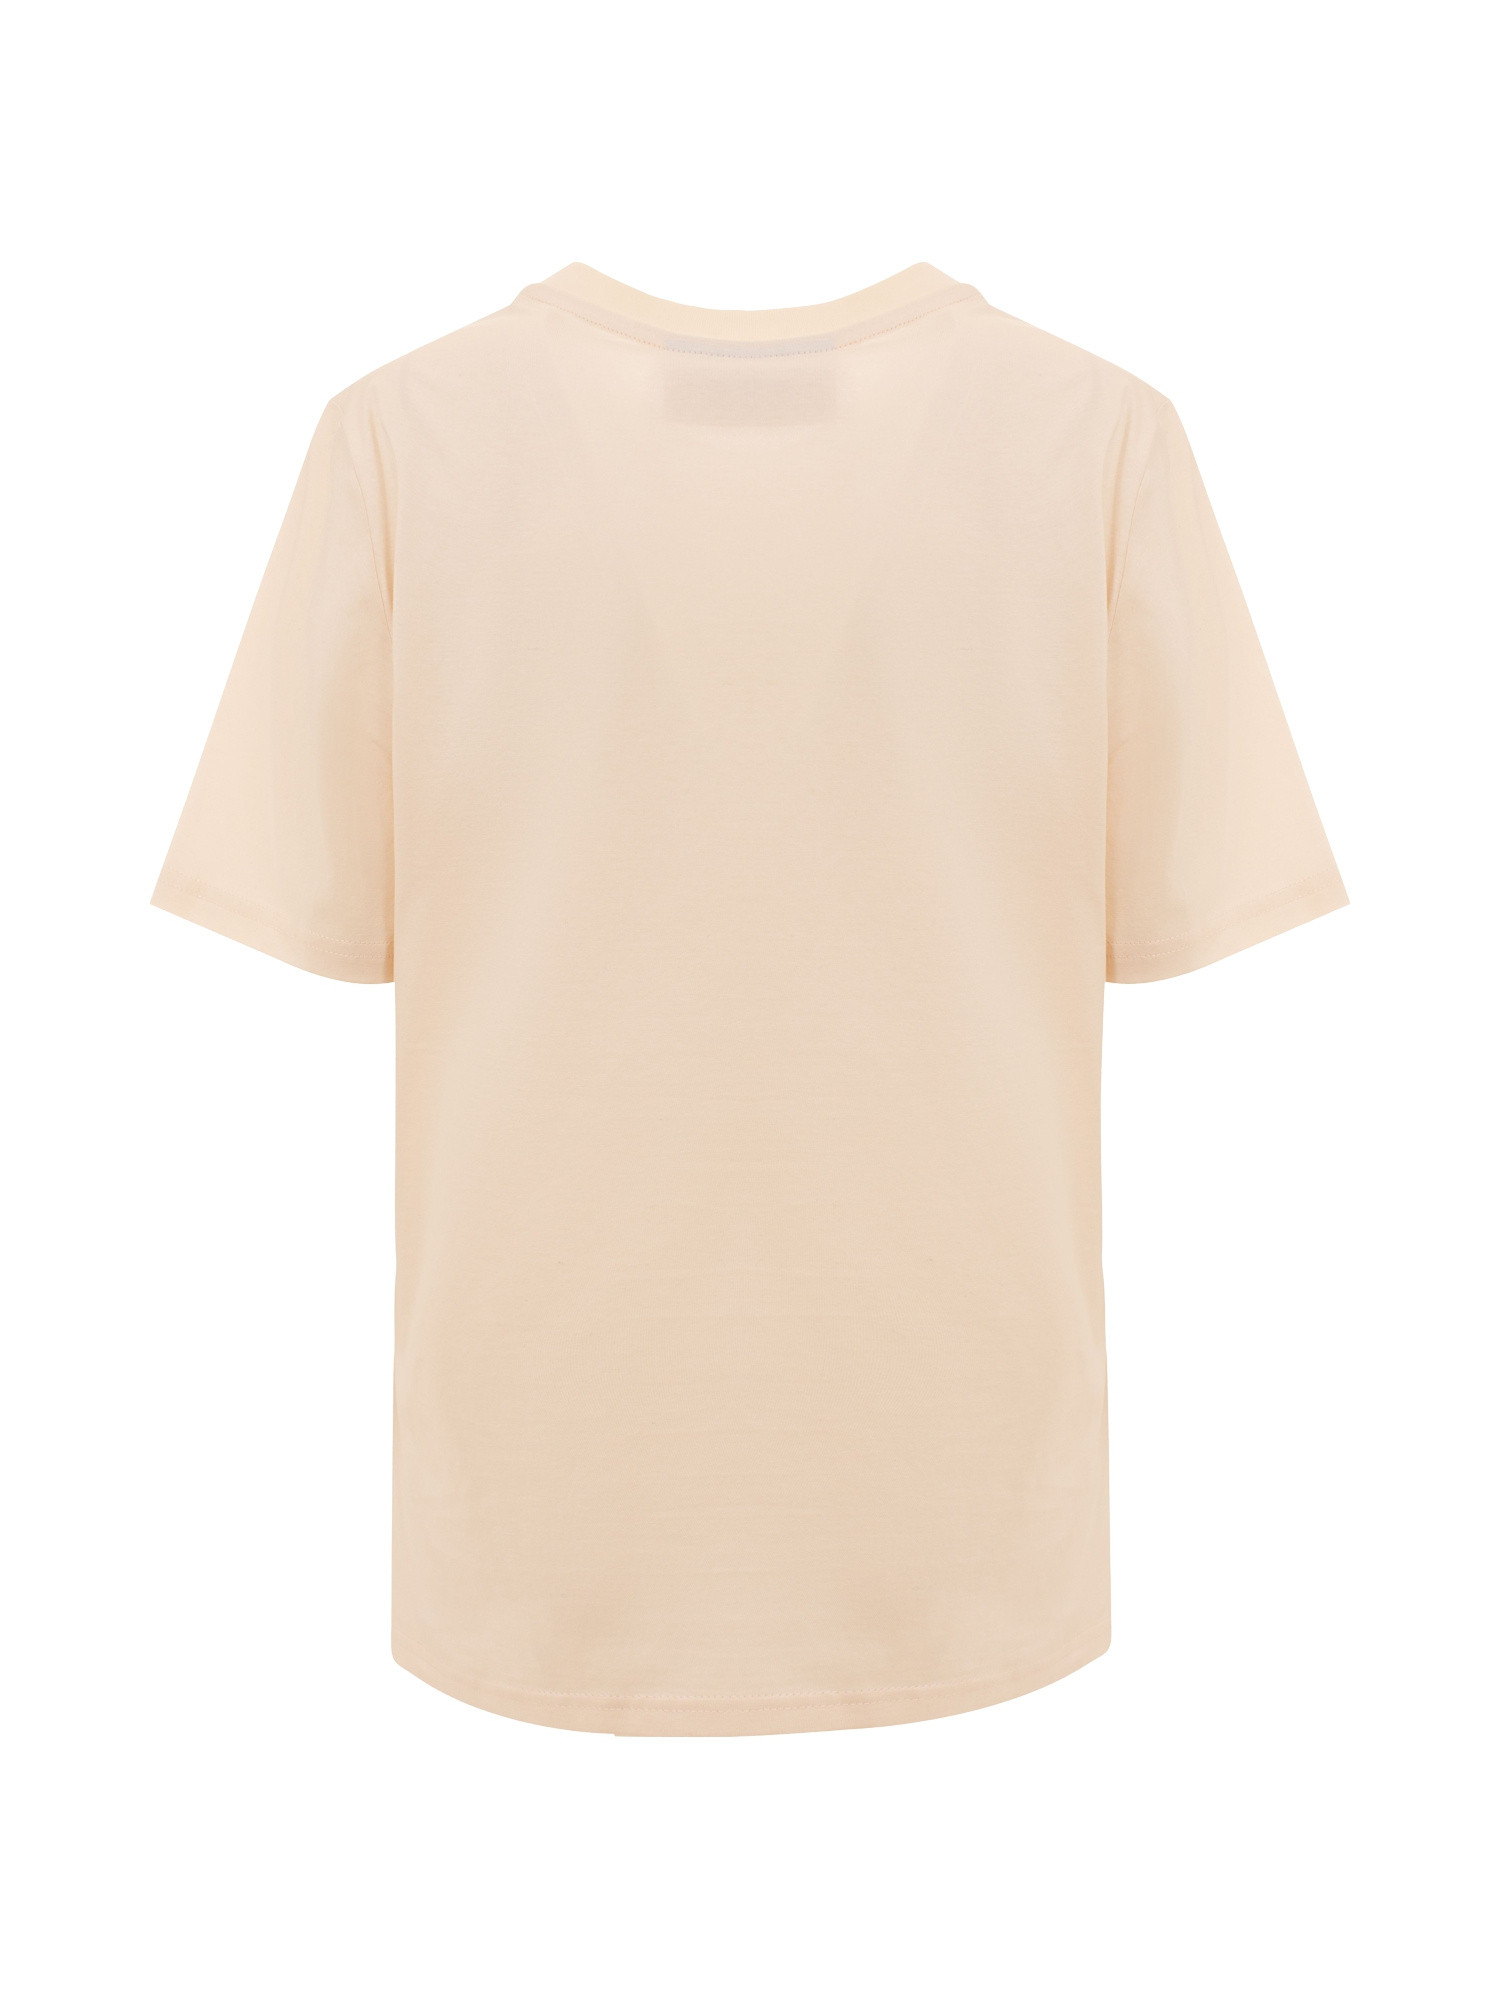 Chiara Ferragni - T-shirt regular fit con stampa tennis, Rosa chiaro, large image number 1